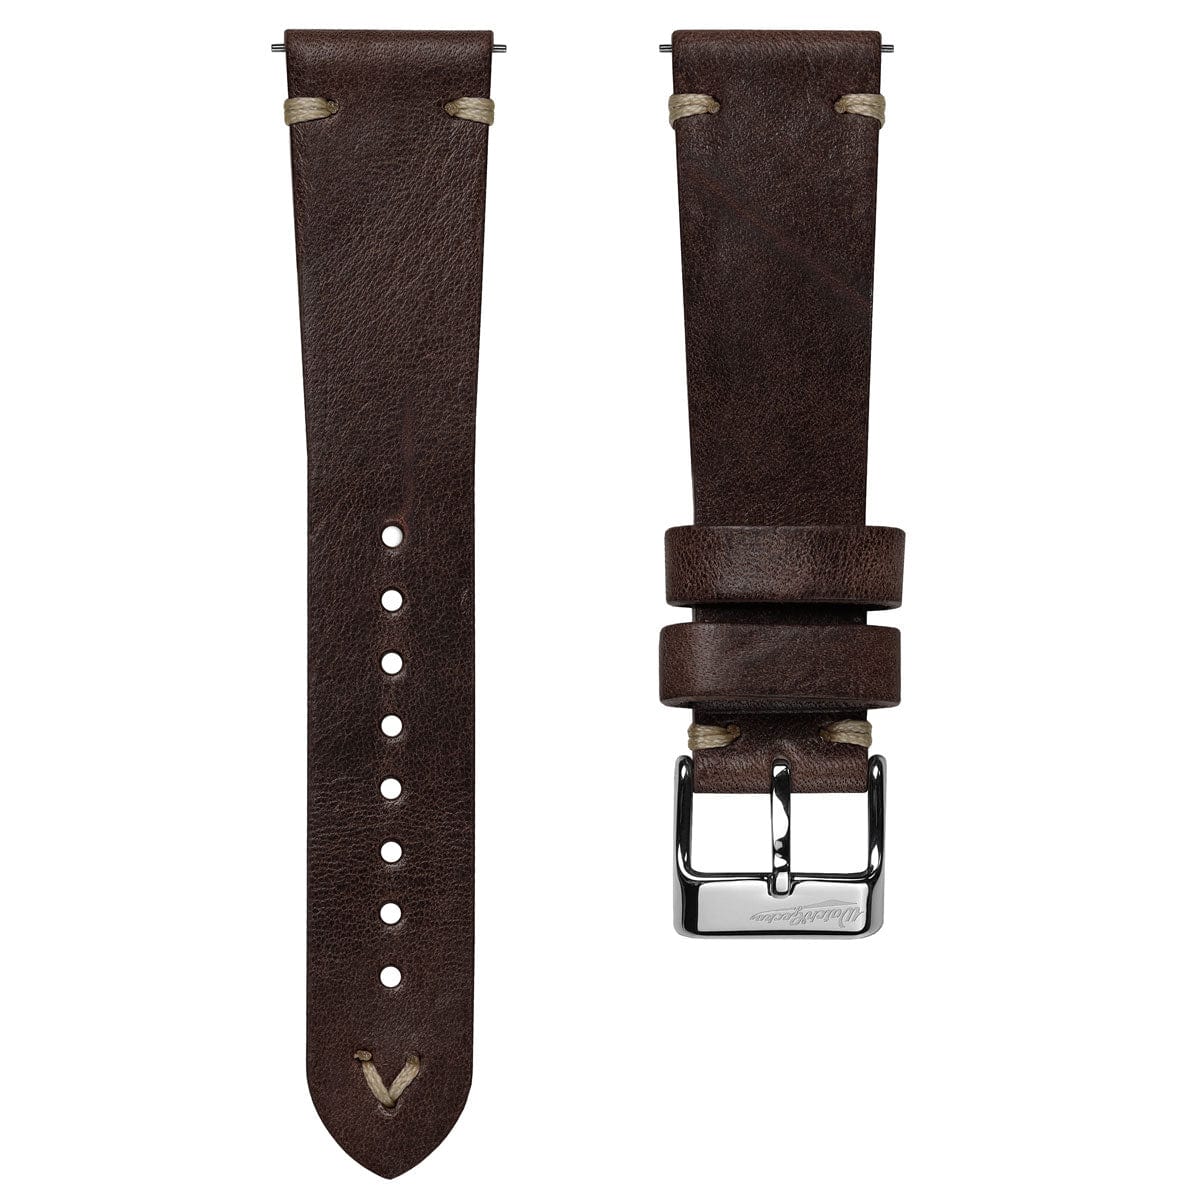 Simple Handmade Italian Leather Watch Strap - Chocolate Brown | WatchGecko